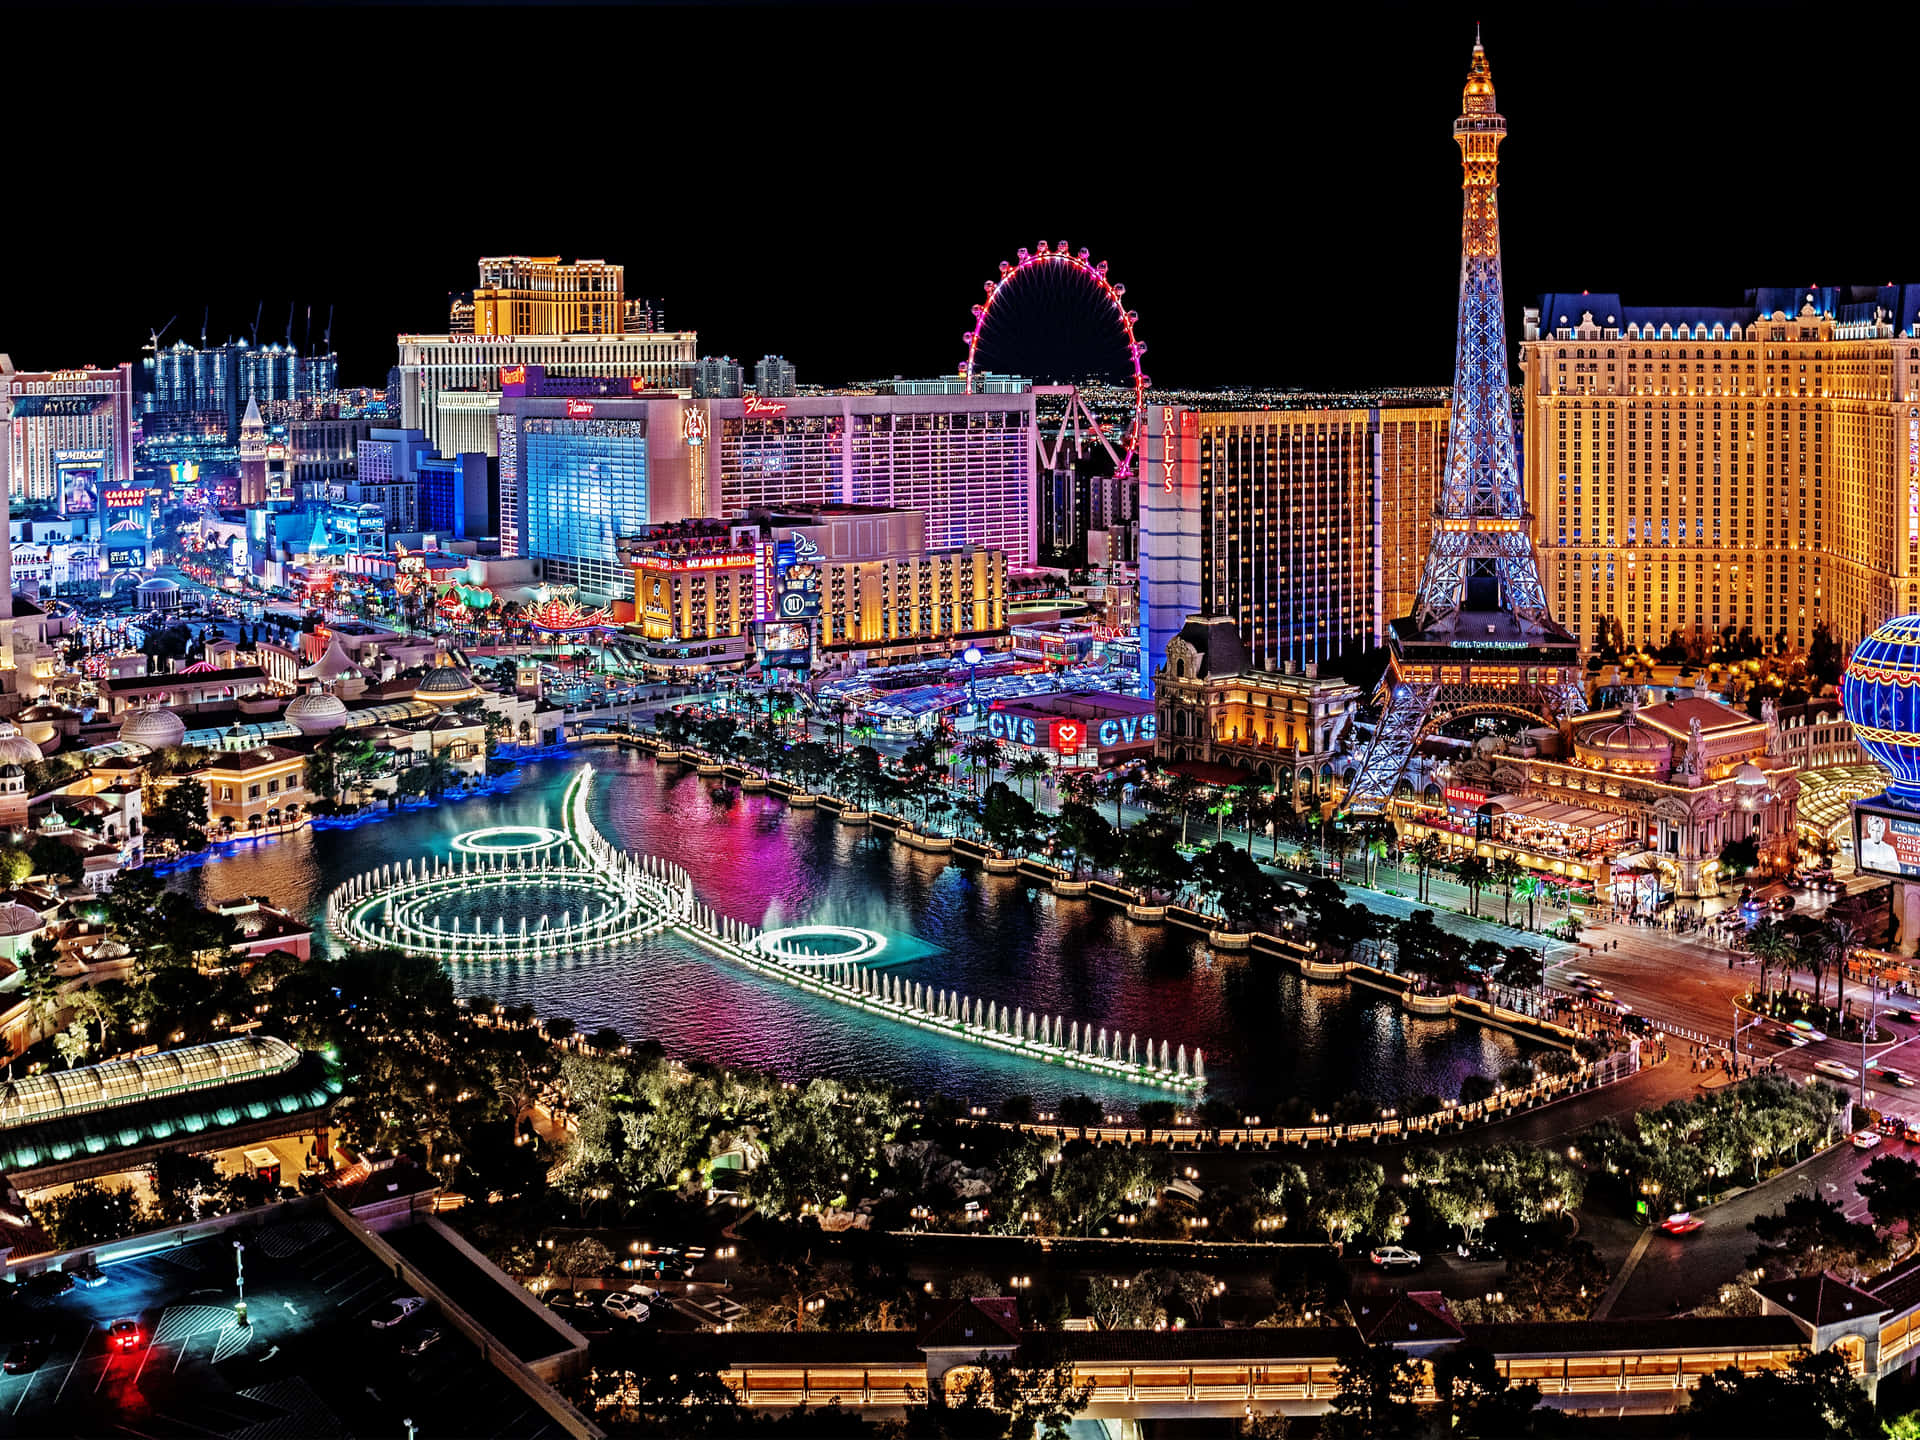 Las Vegas - An Alluring City of Luxury